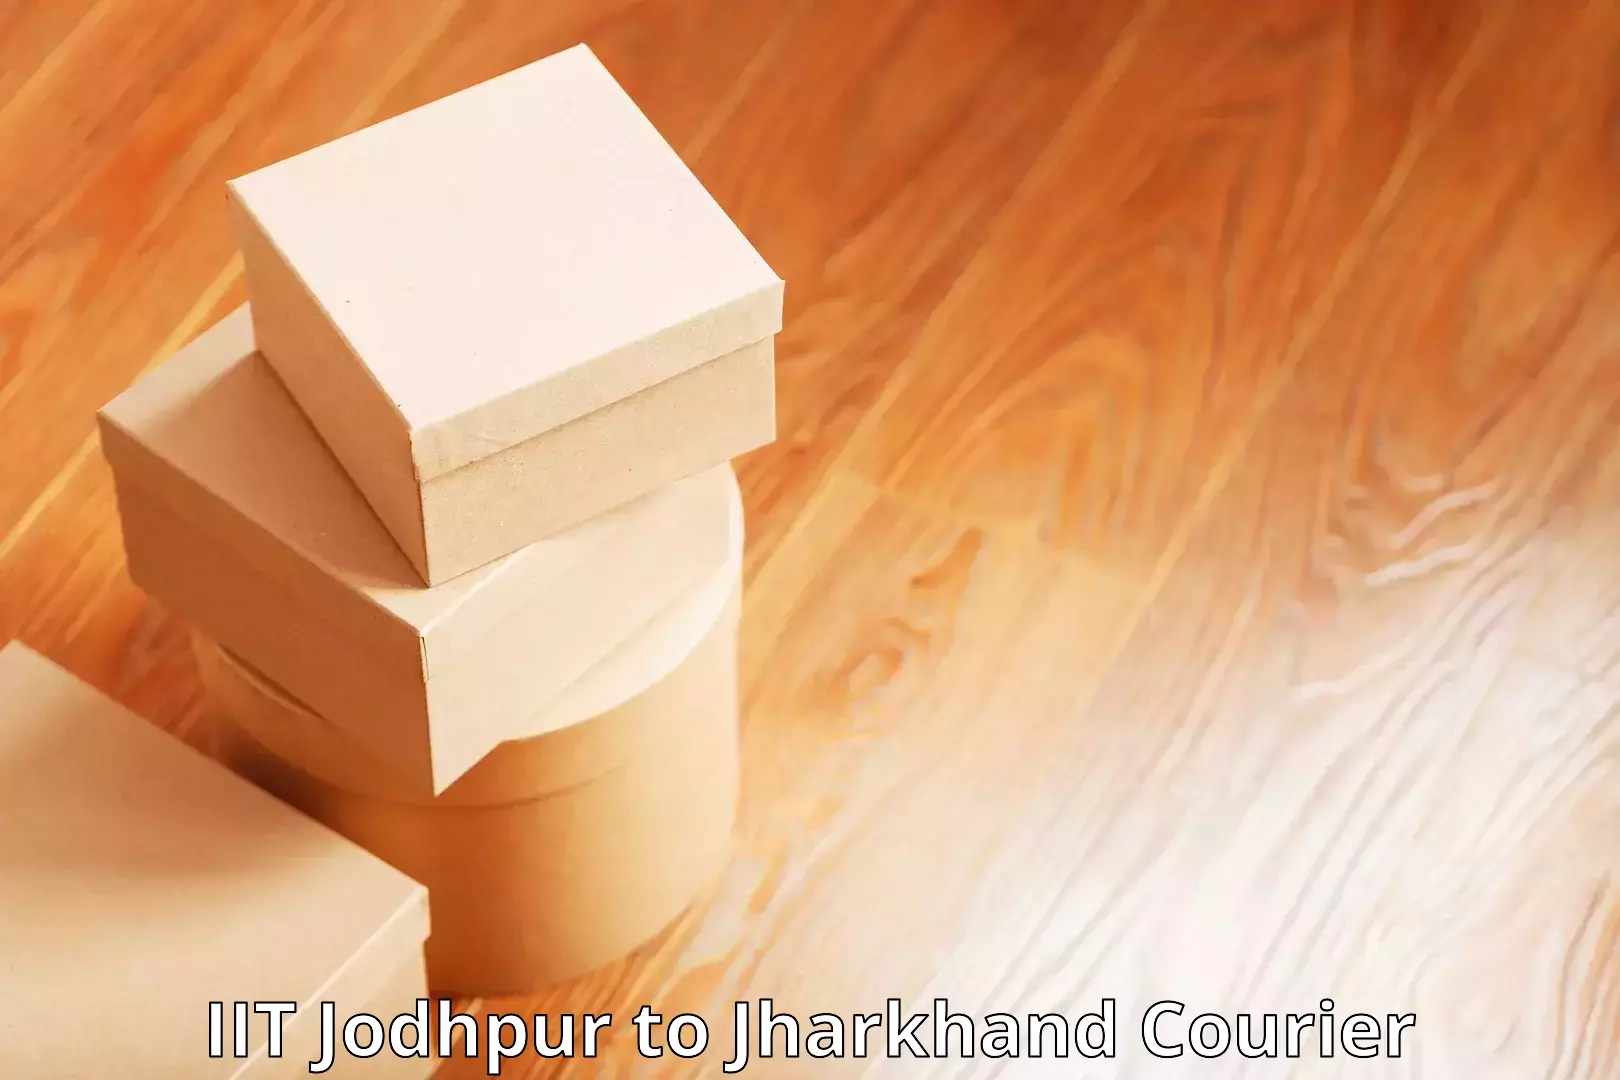 Express package handling IIT Jodhpur to IIIT Ranchi